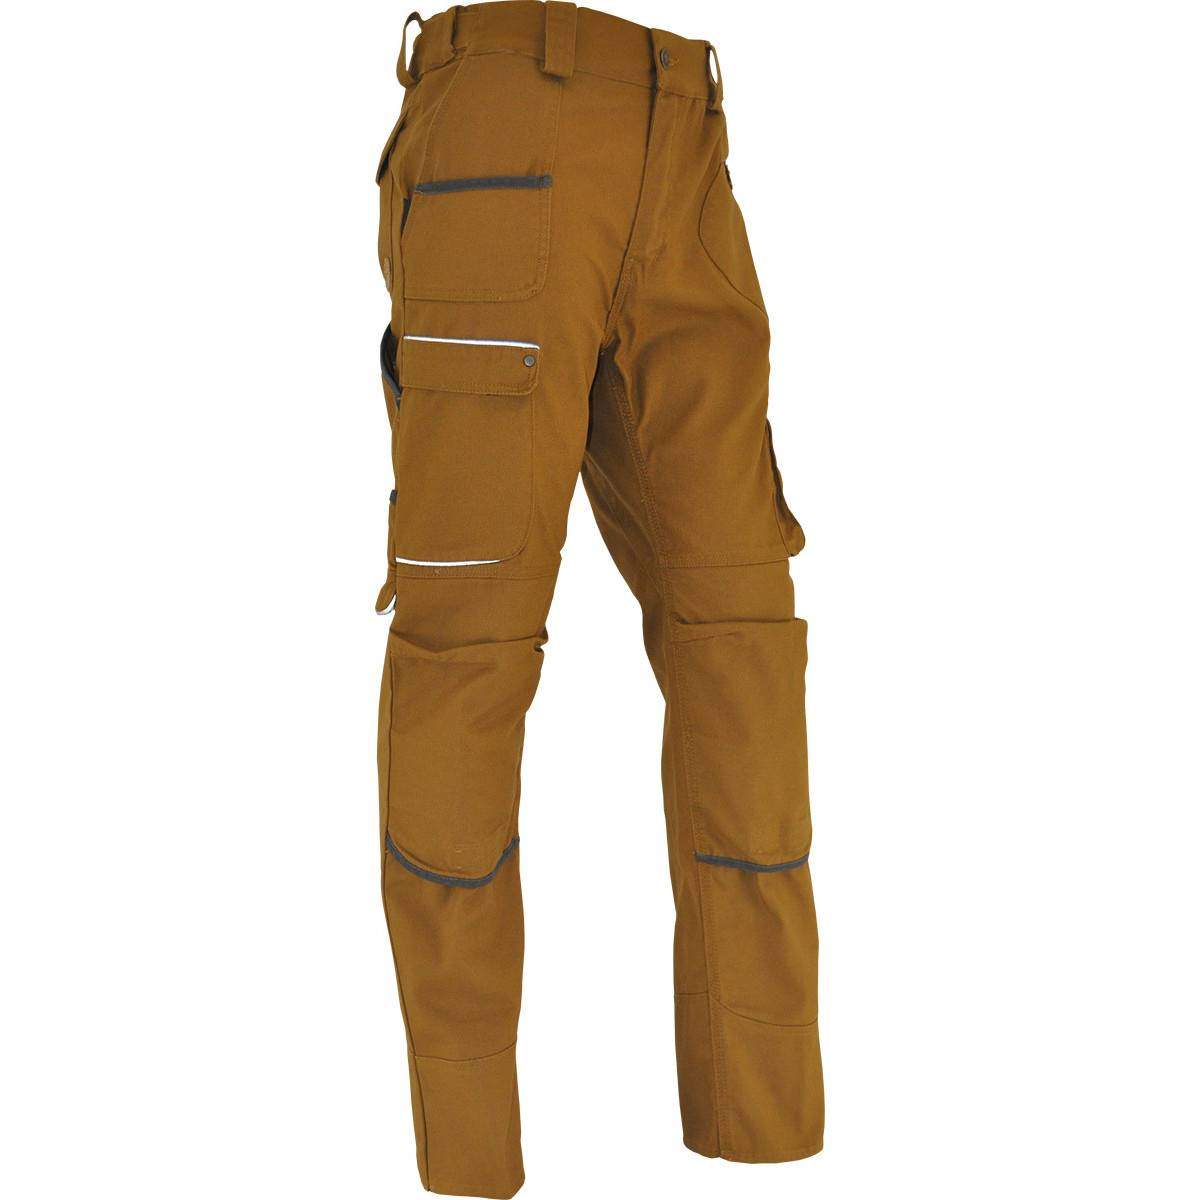 Pantalon chantier SAHARA Taille 46, poches multiples, genouillères incluses, bronze